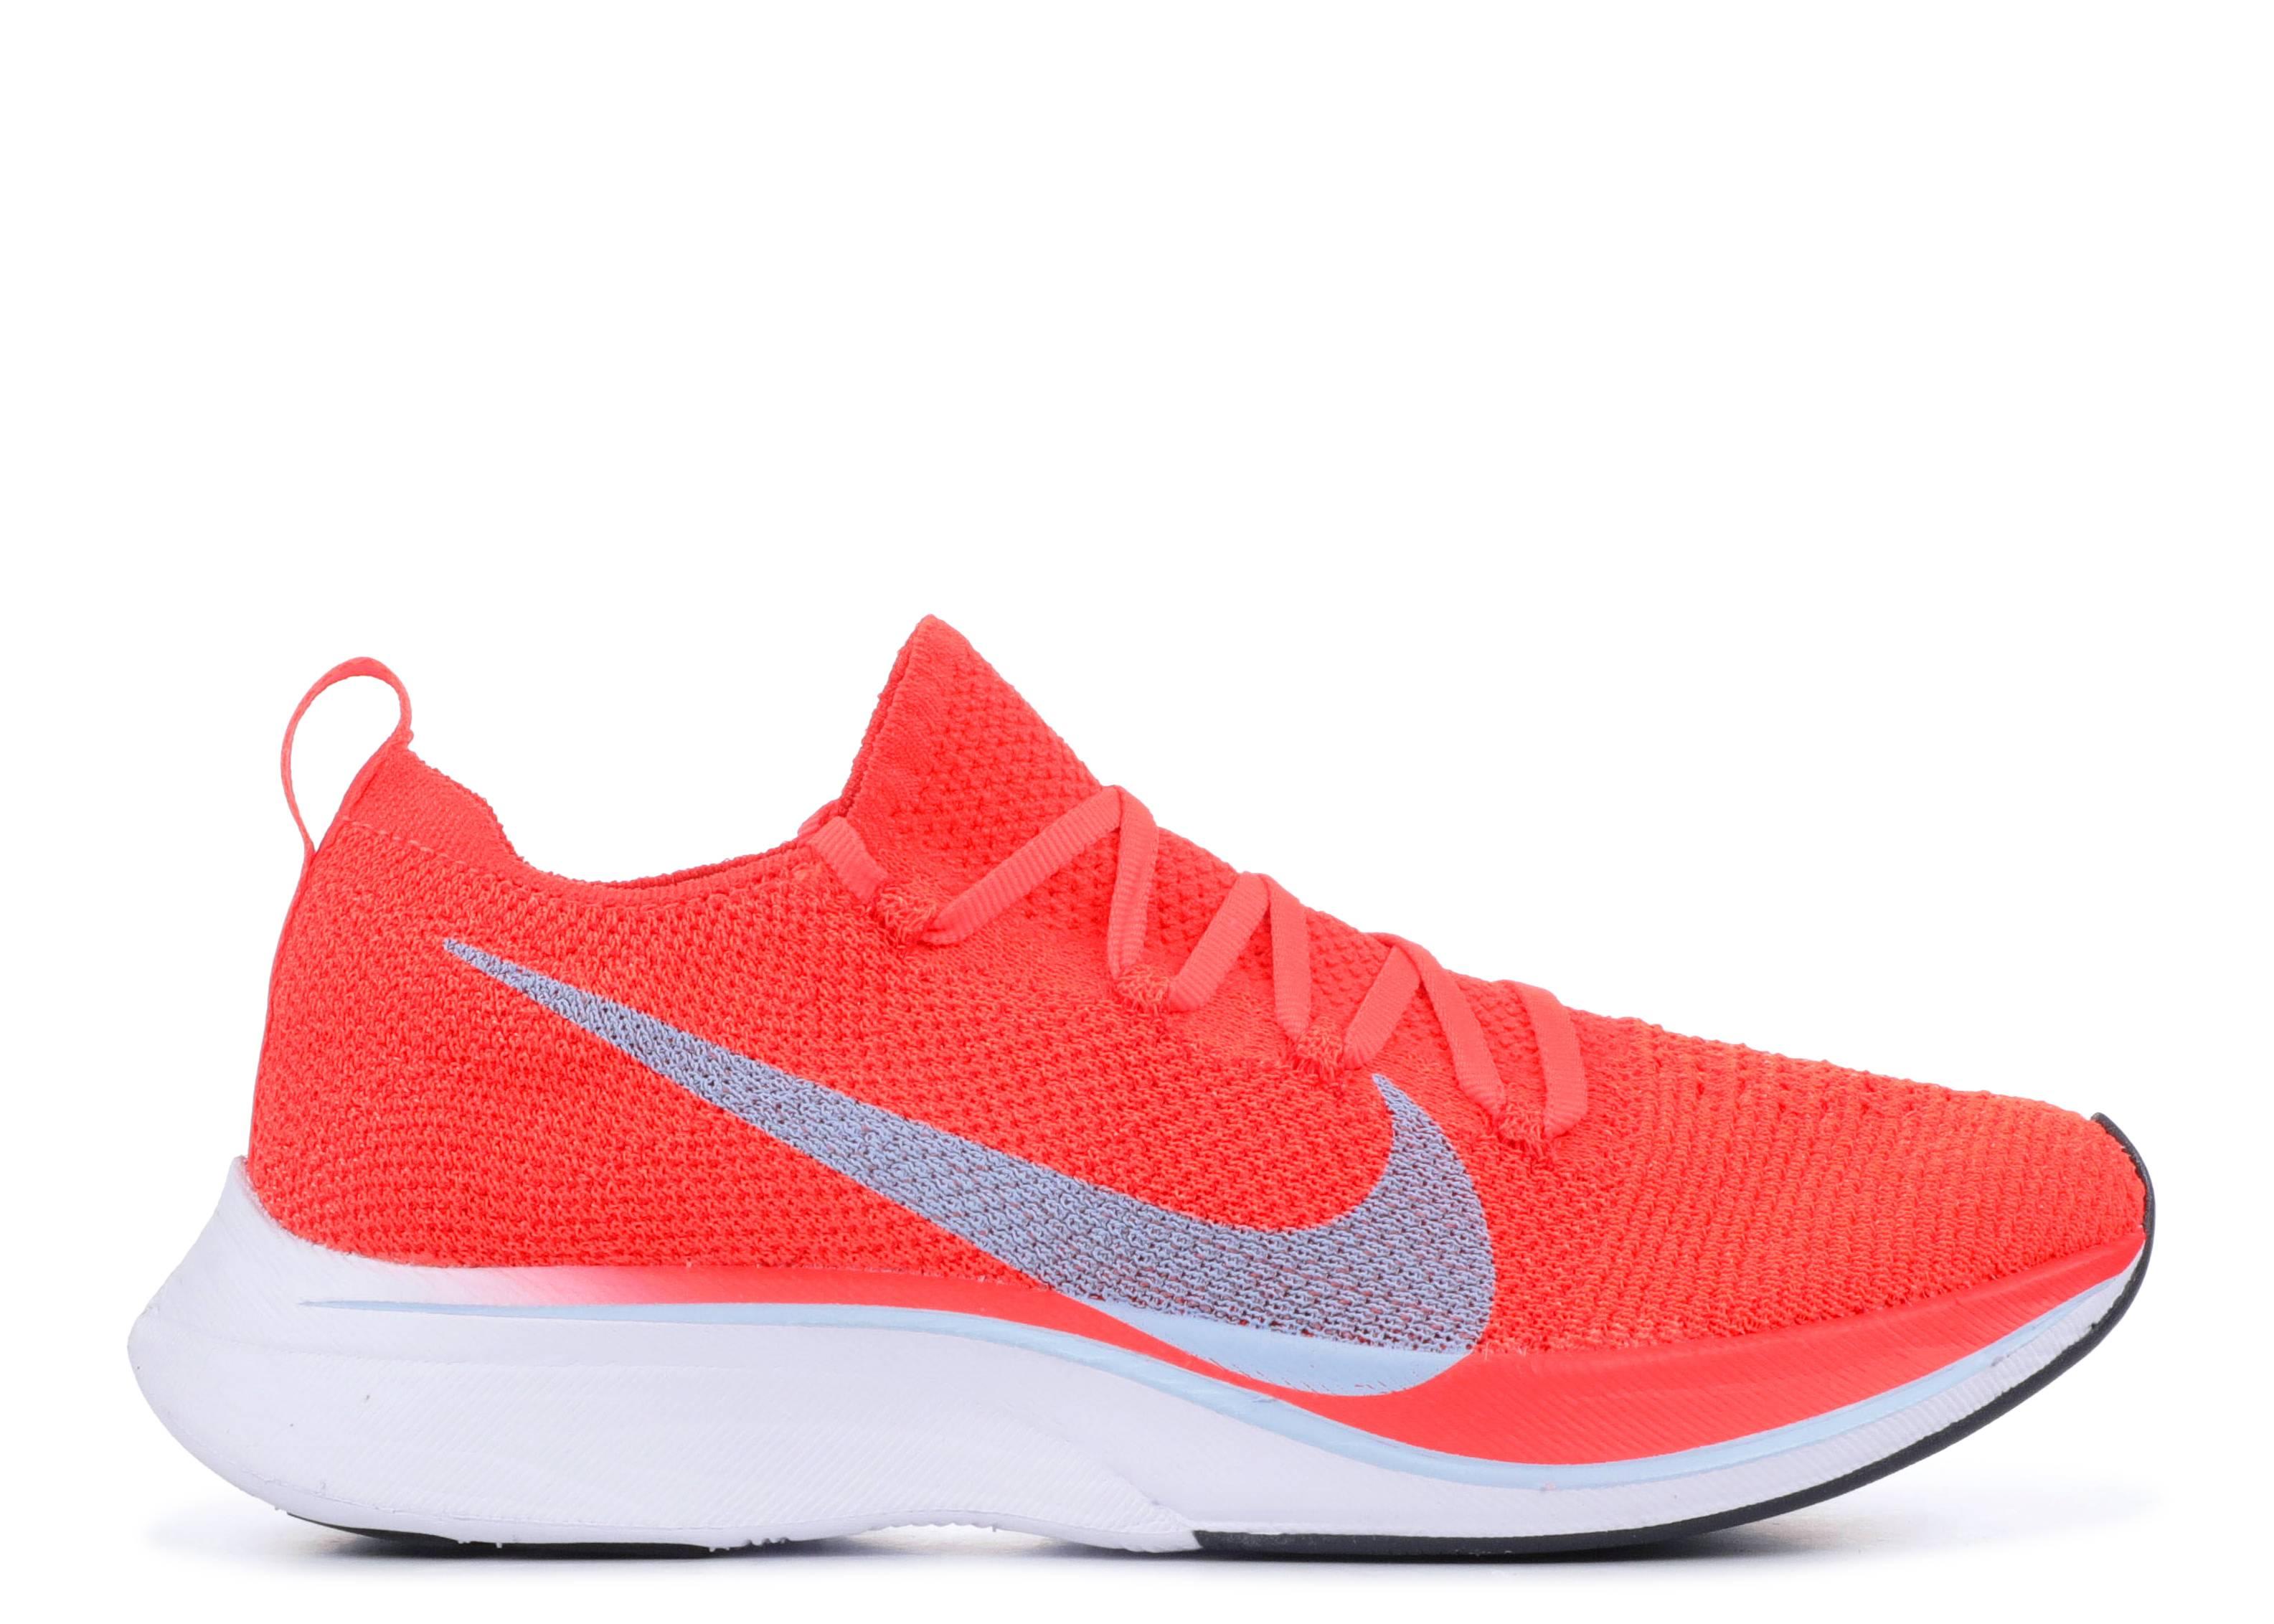 Nike Vaporfly 4% Flyknit Running Shoe in Orange for Men - Lyst